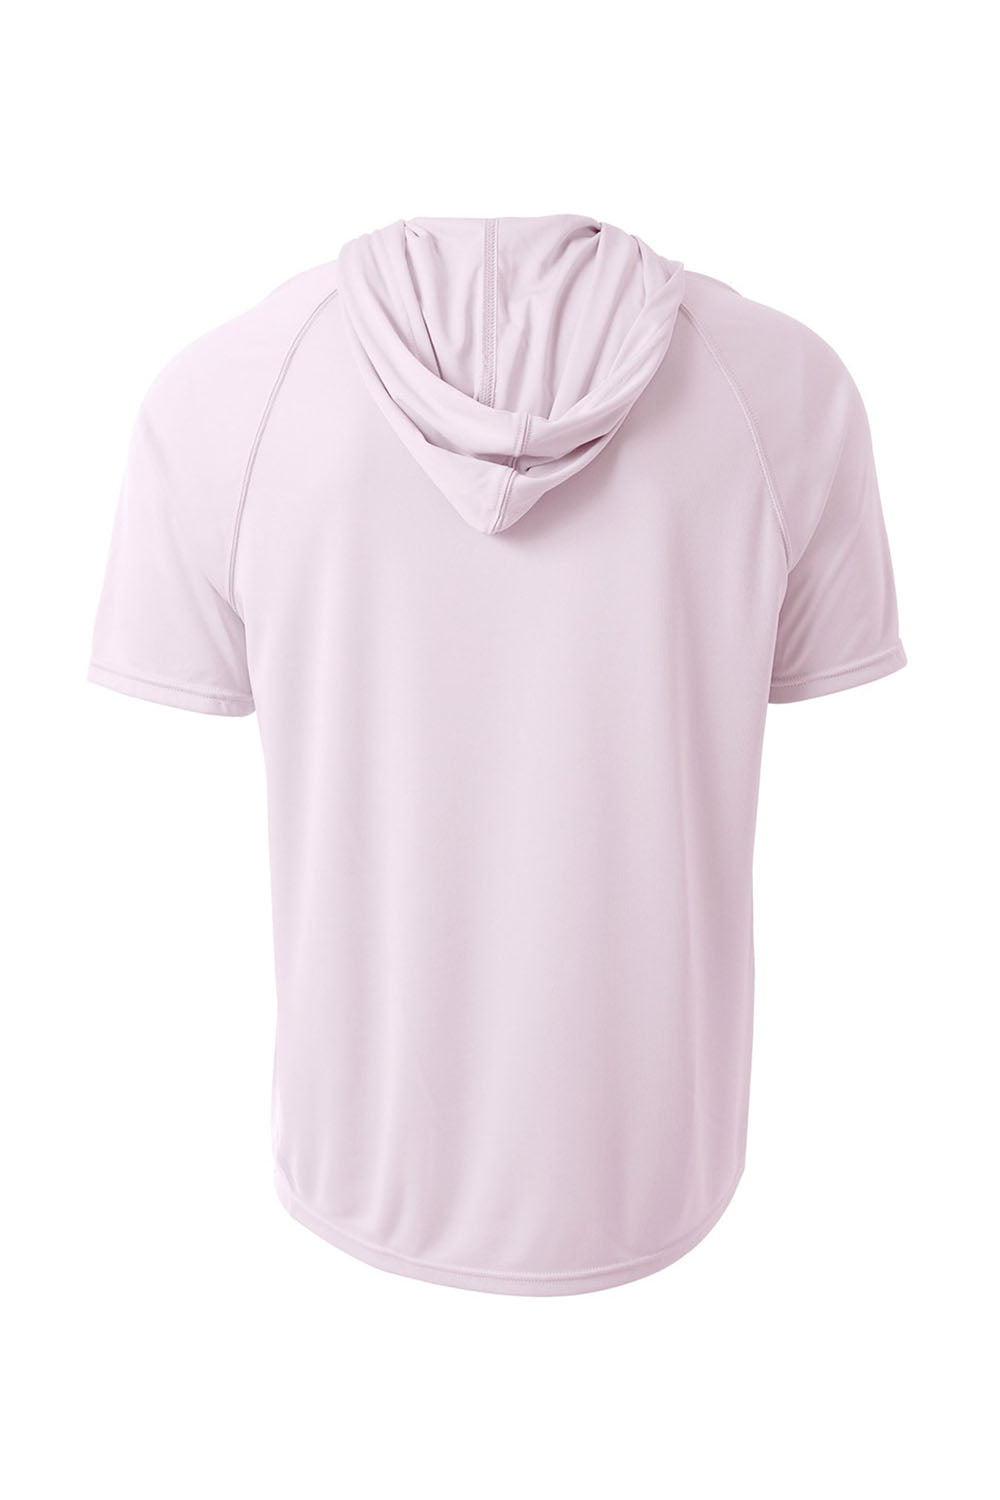 A4 N3408 Mens Performance Moisture Wicking Short Sleeve Hooded T-Shirt Hoodie White Flat Back